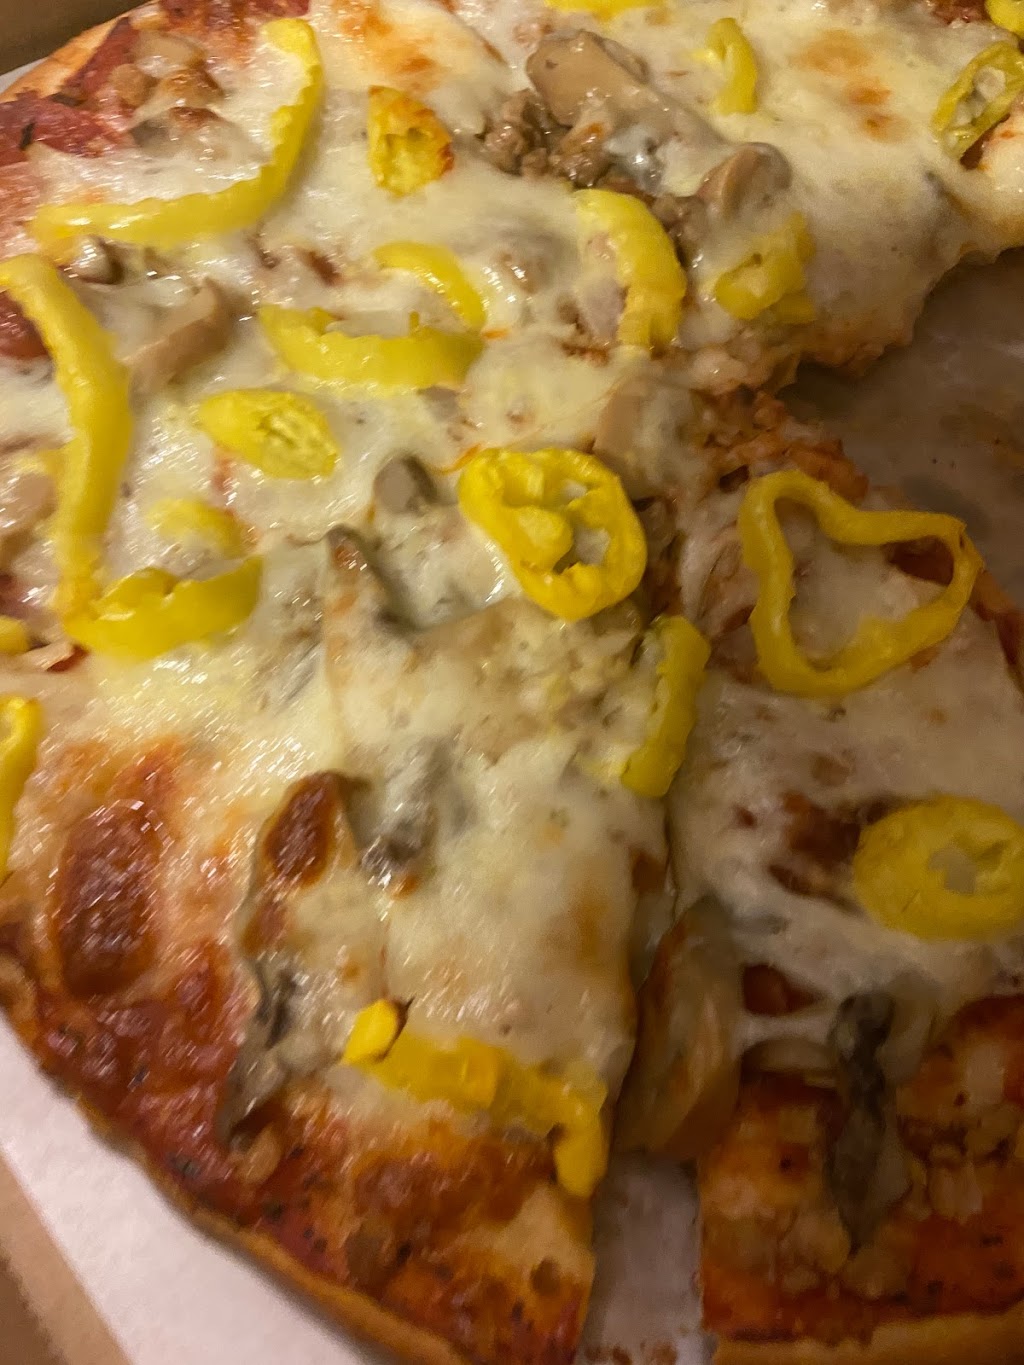 Angilos Pizza | 807 Loveland Madeira Rd, Loveland, OH 45140, USA | Phone: (513) 683-0001